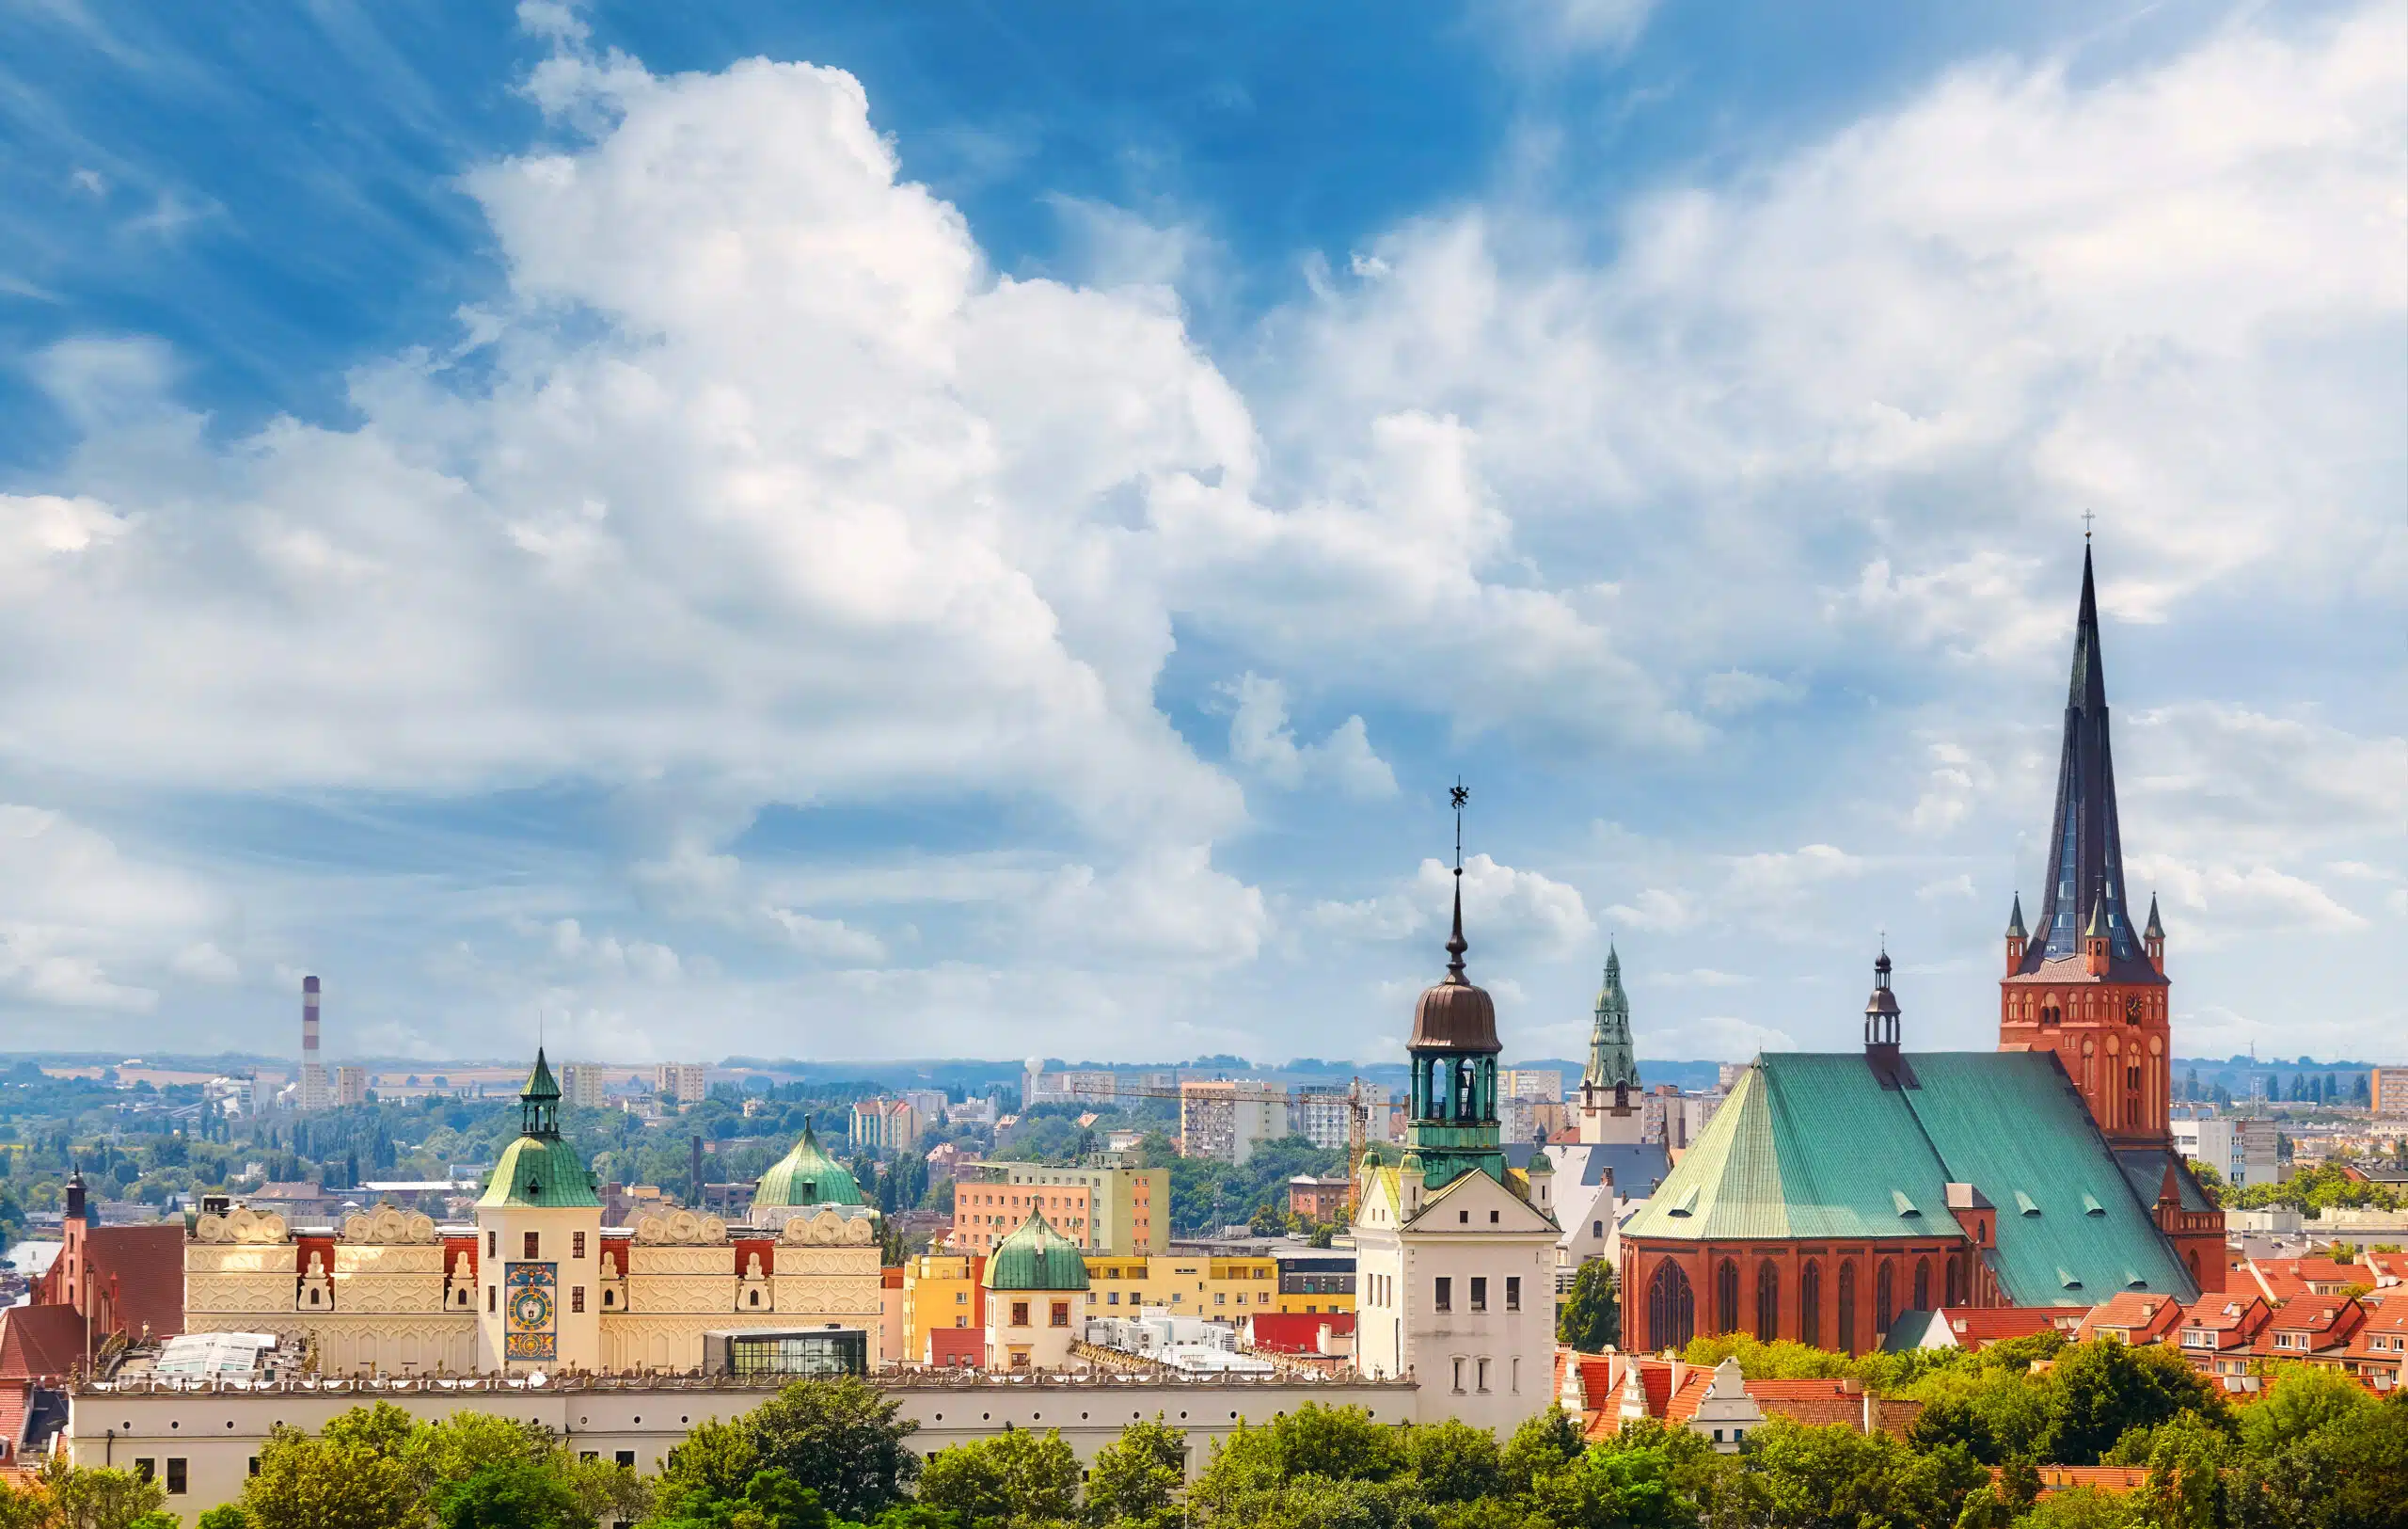 Panoramic view of Szczecin City downtown, Poland.